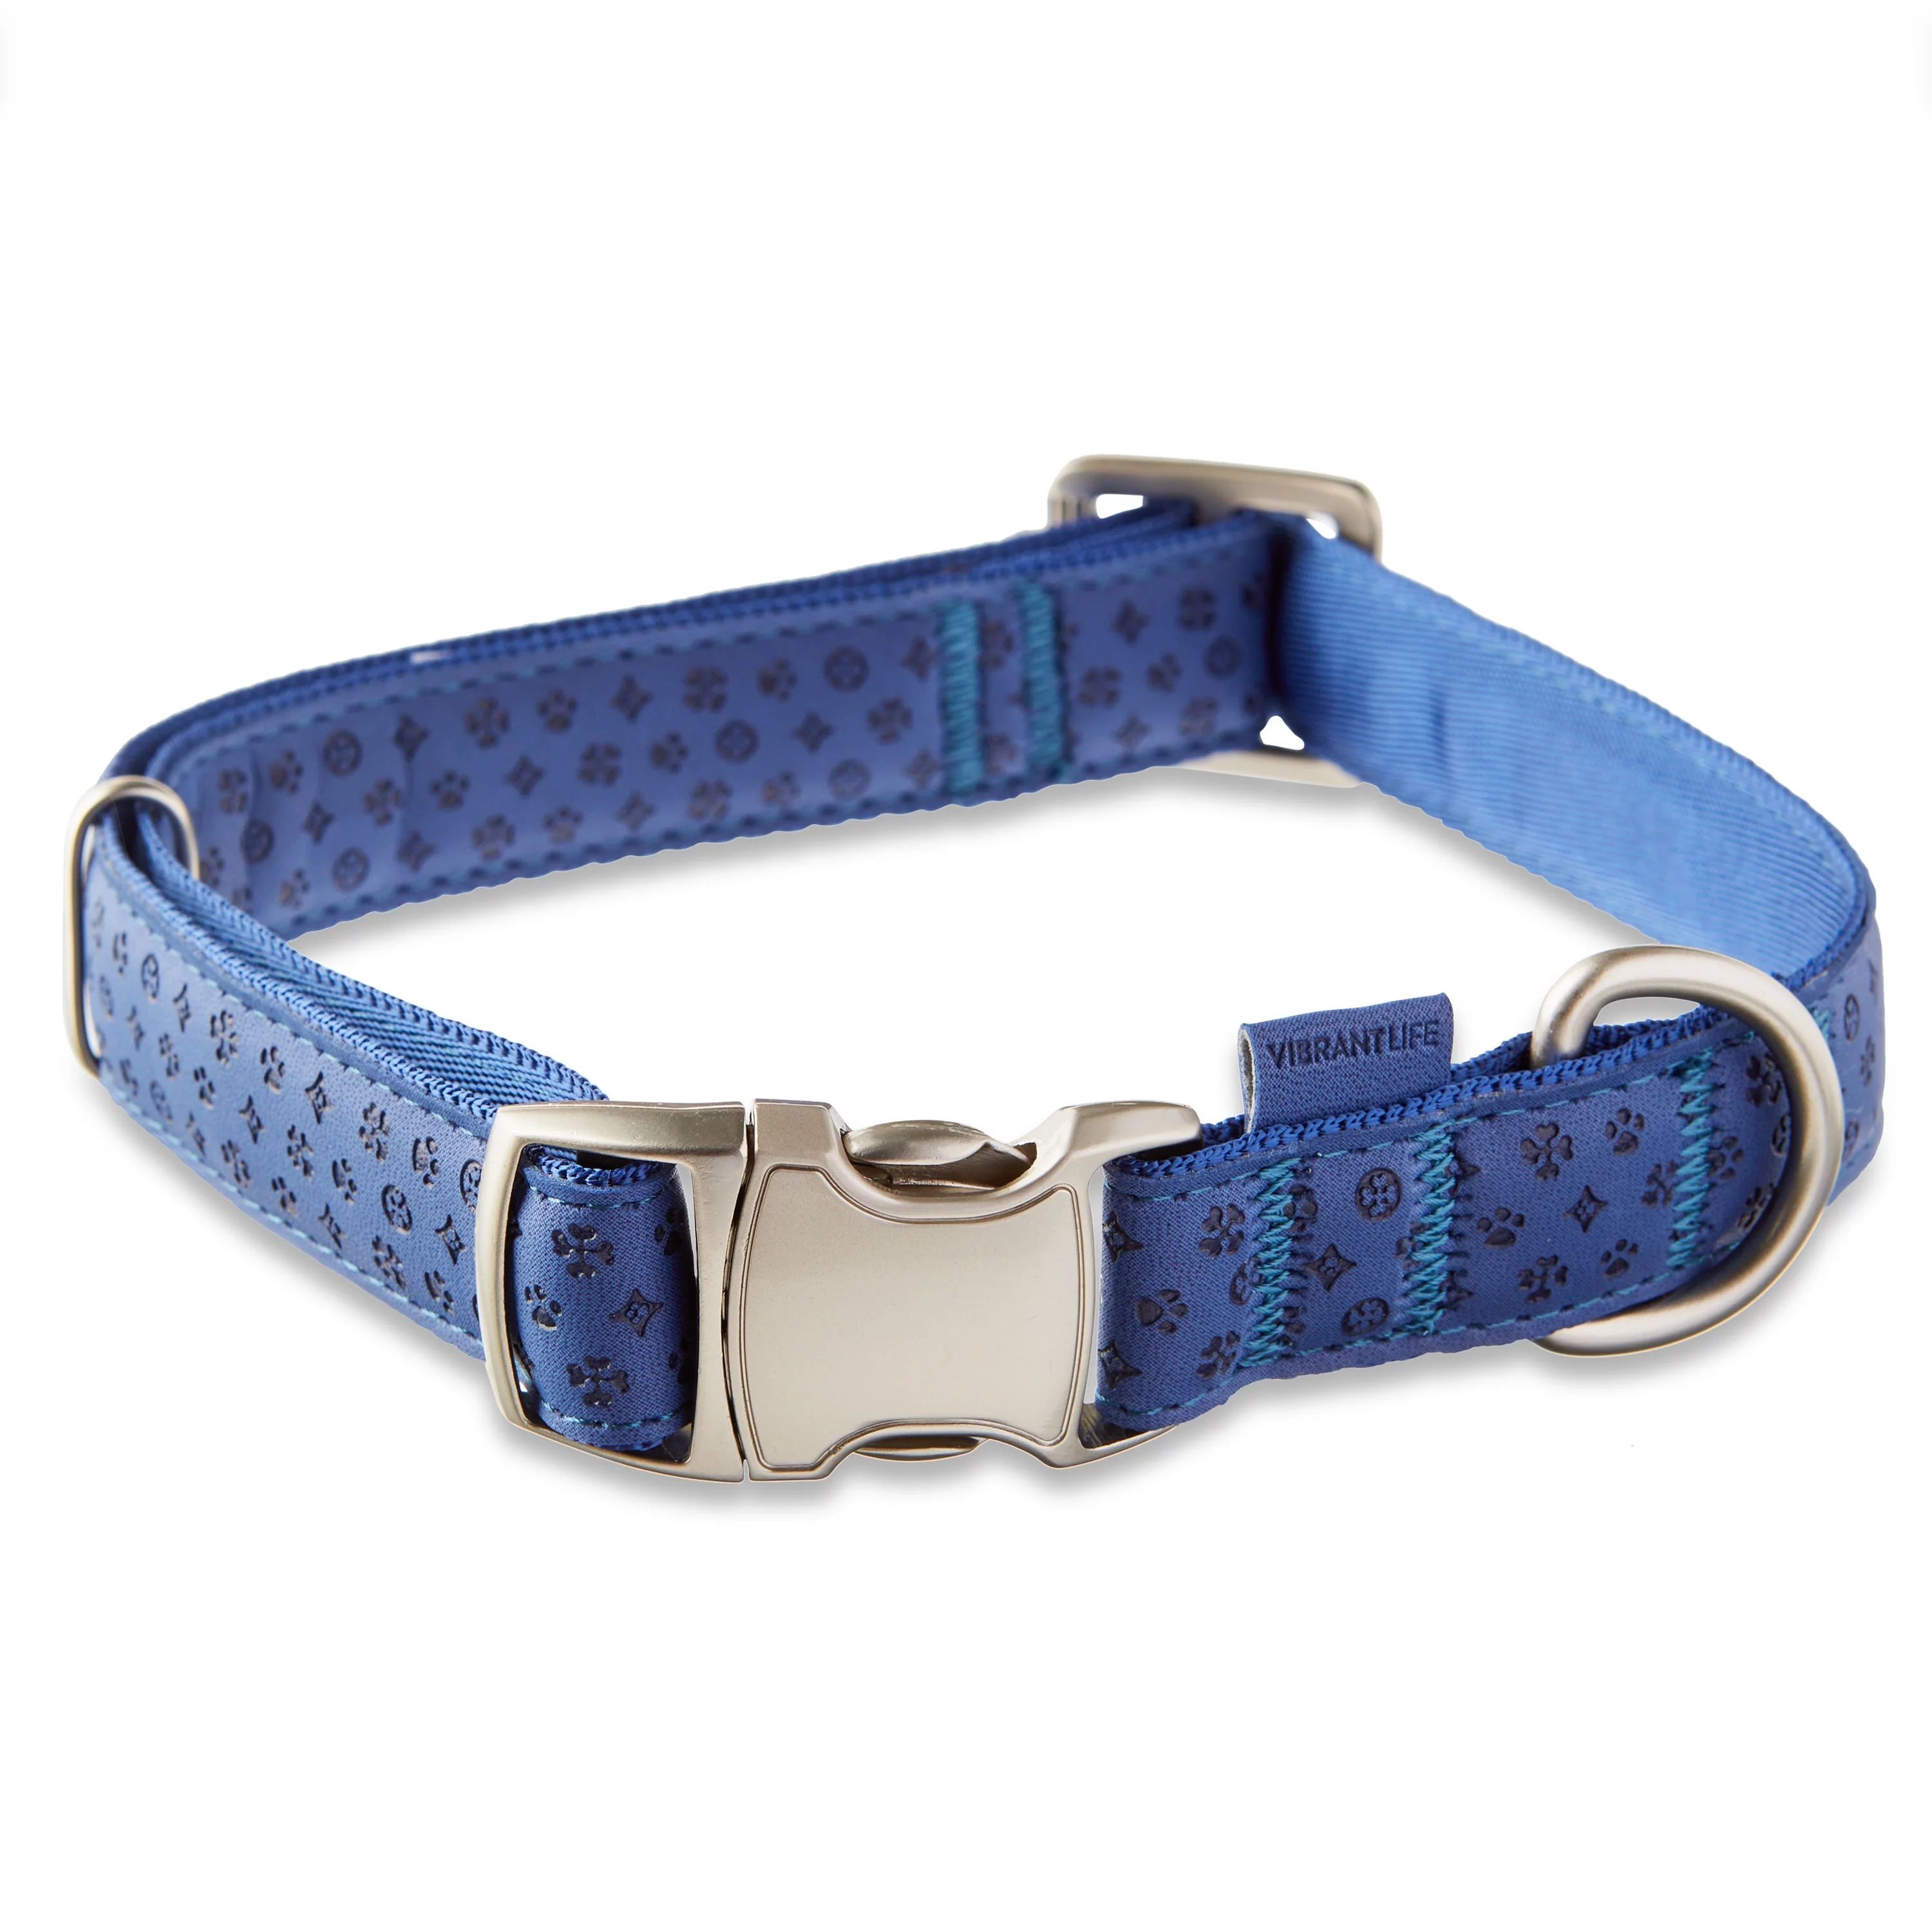 Vibrant Life Leather & Polyurethane Embossed Fashion Dog Collar, Blue, L | Walmart (US)